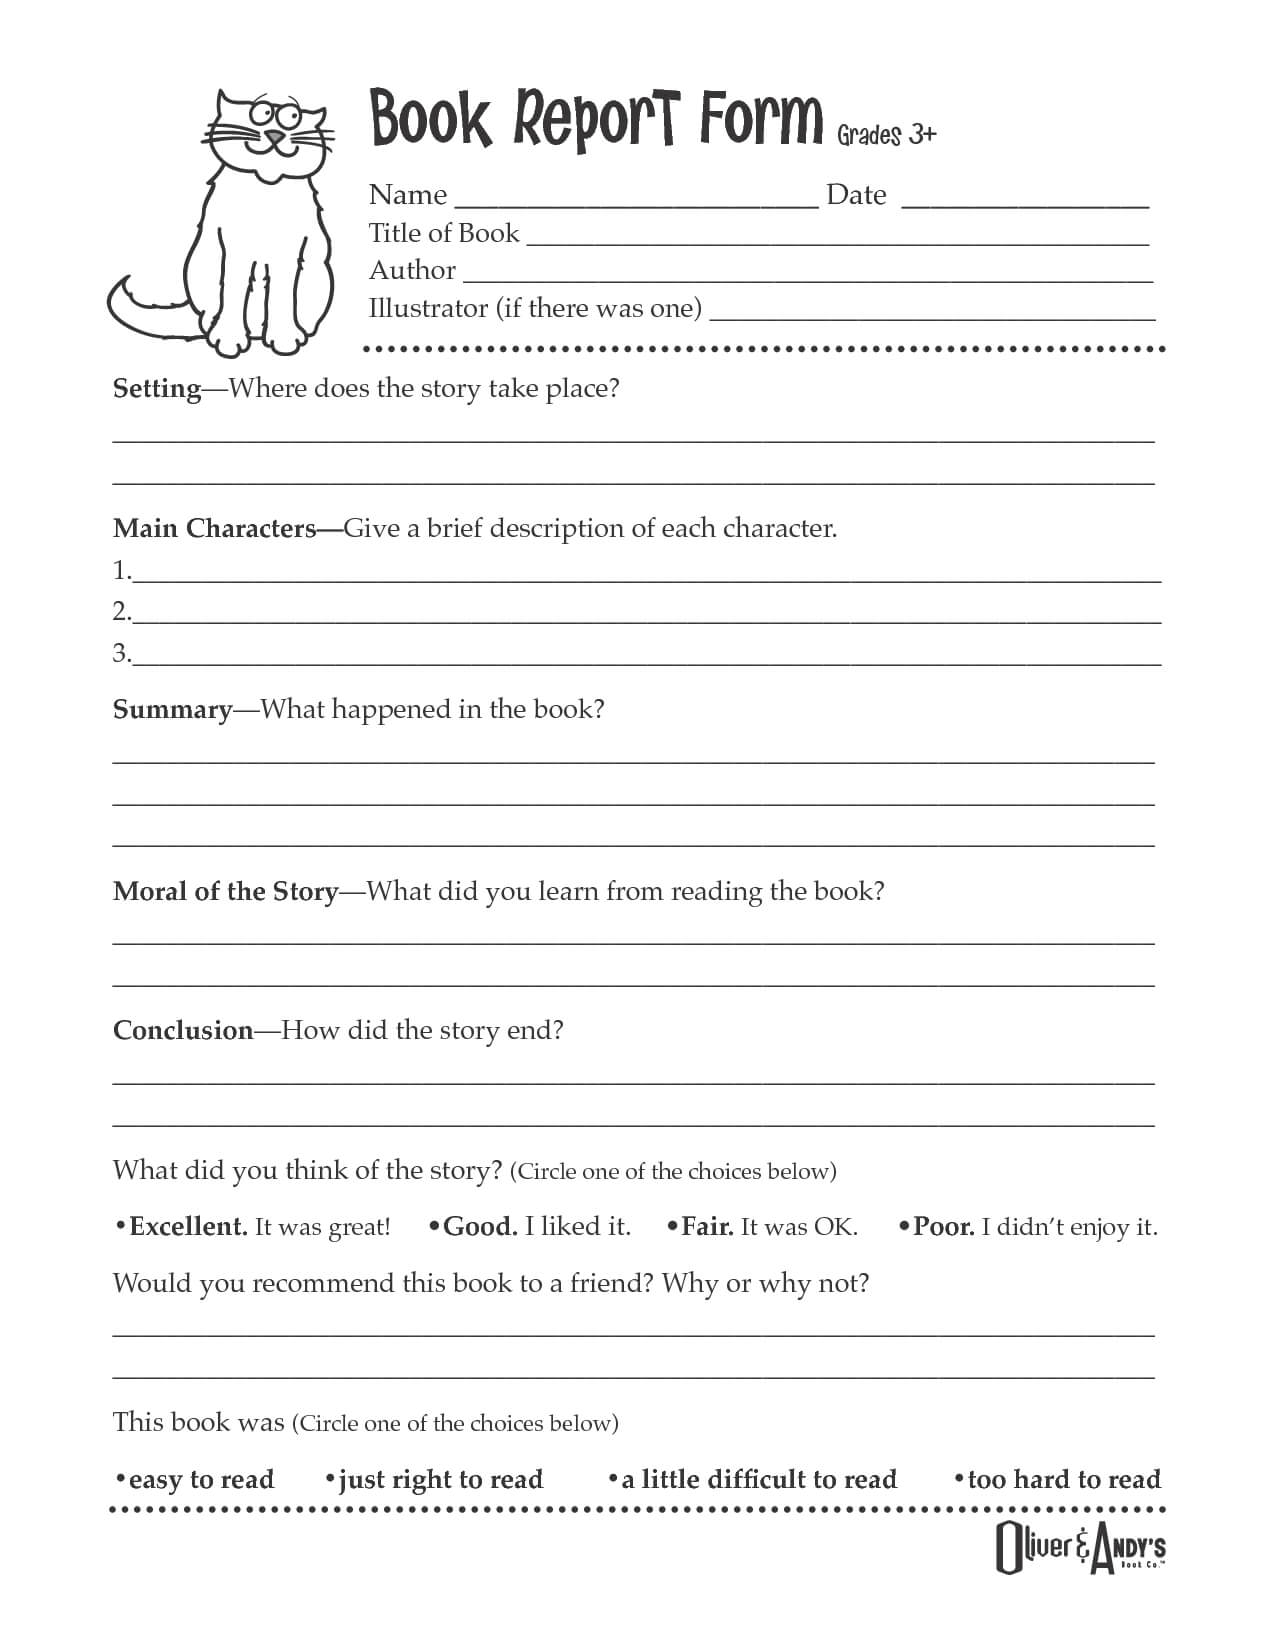 Second Grade Book Report Template | Book Report Form Grades In Book Report Template 4Th Grade